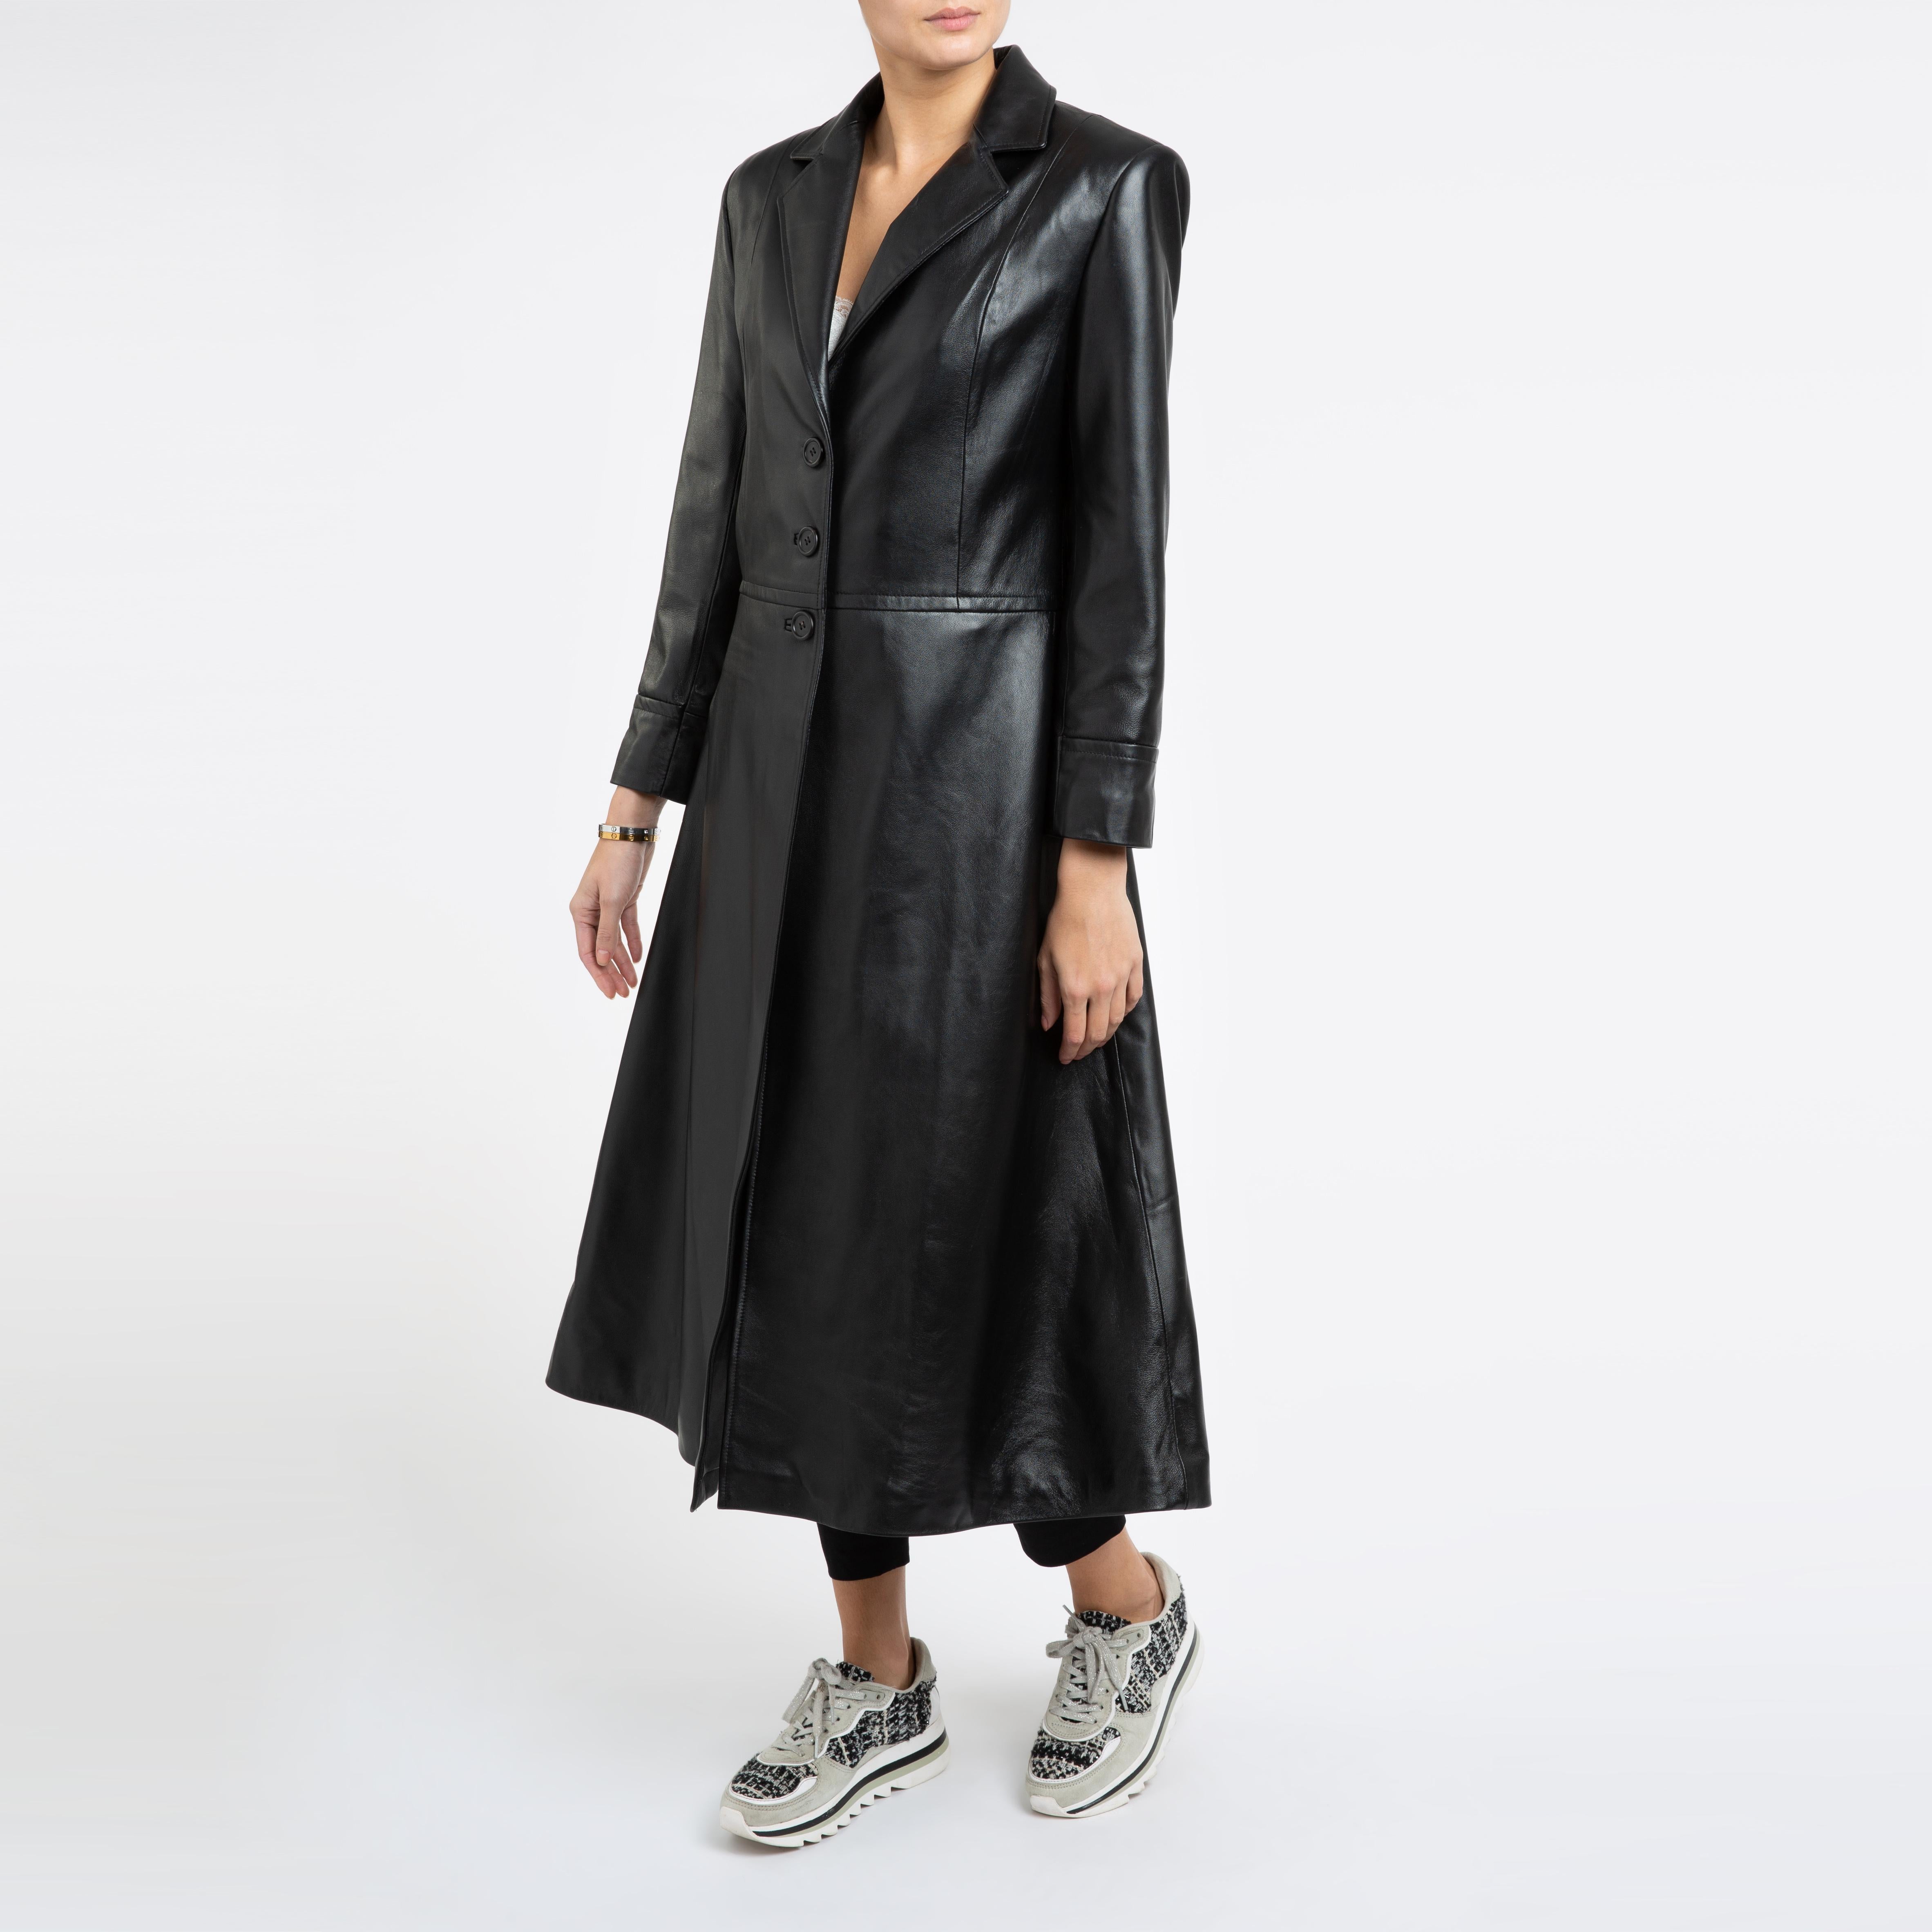 Verheyen London Oversize 70's Leather Trench Coat in Black - Size uk 12 For Sale 7